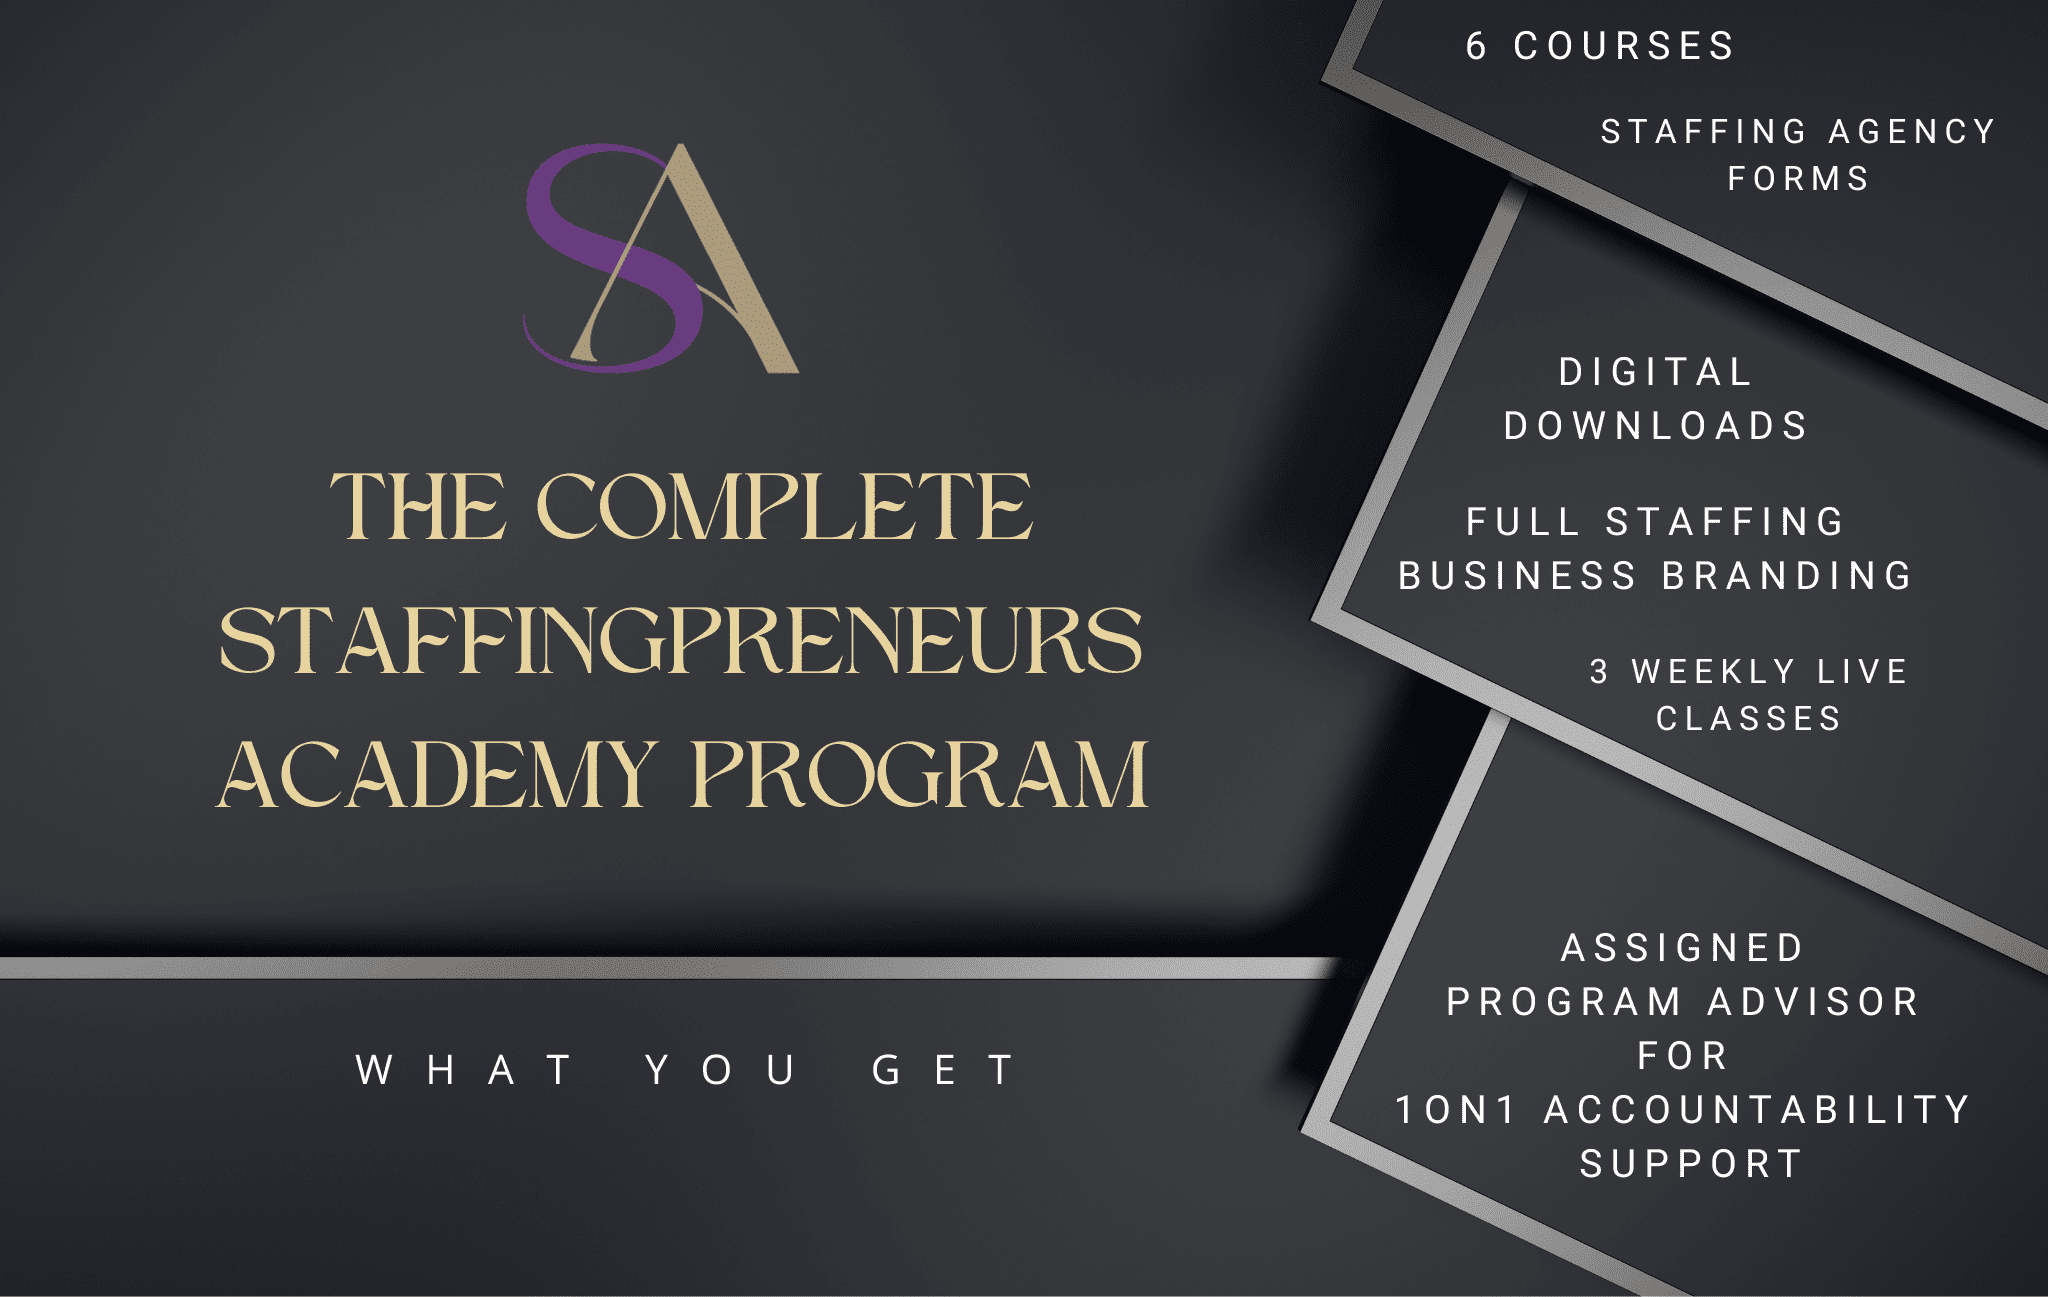 The Complete Staffingpreneurs Academy Program